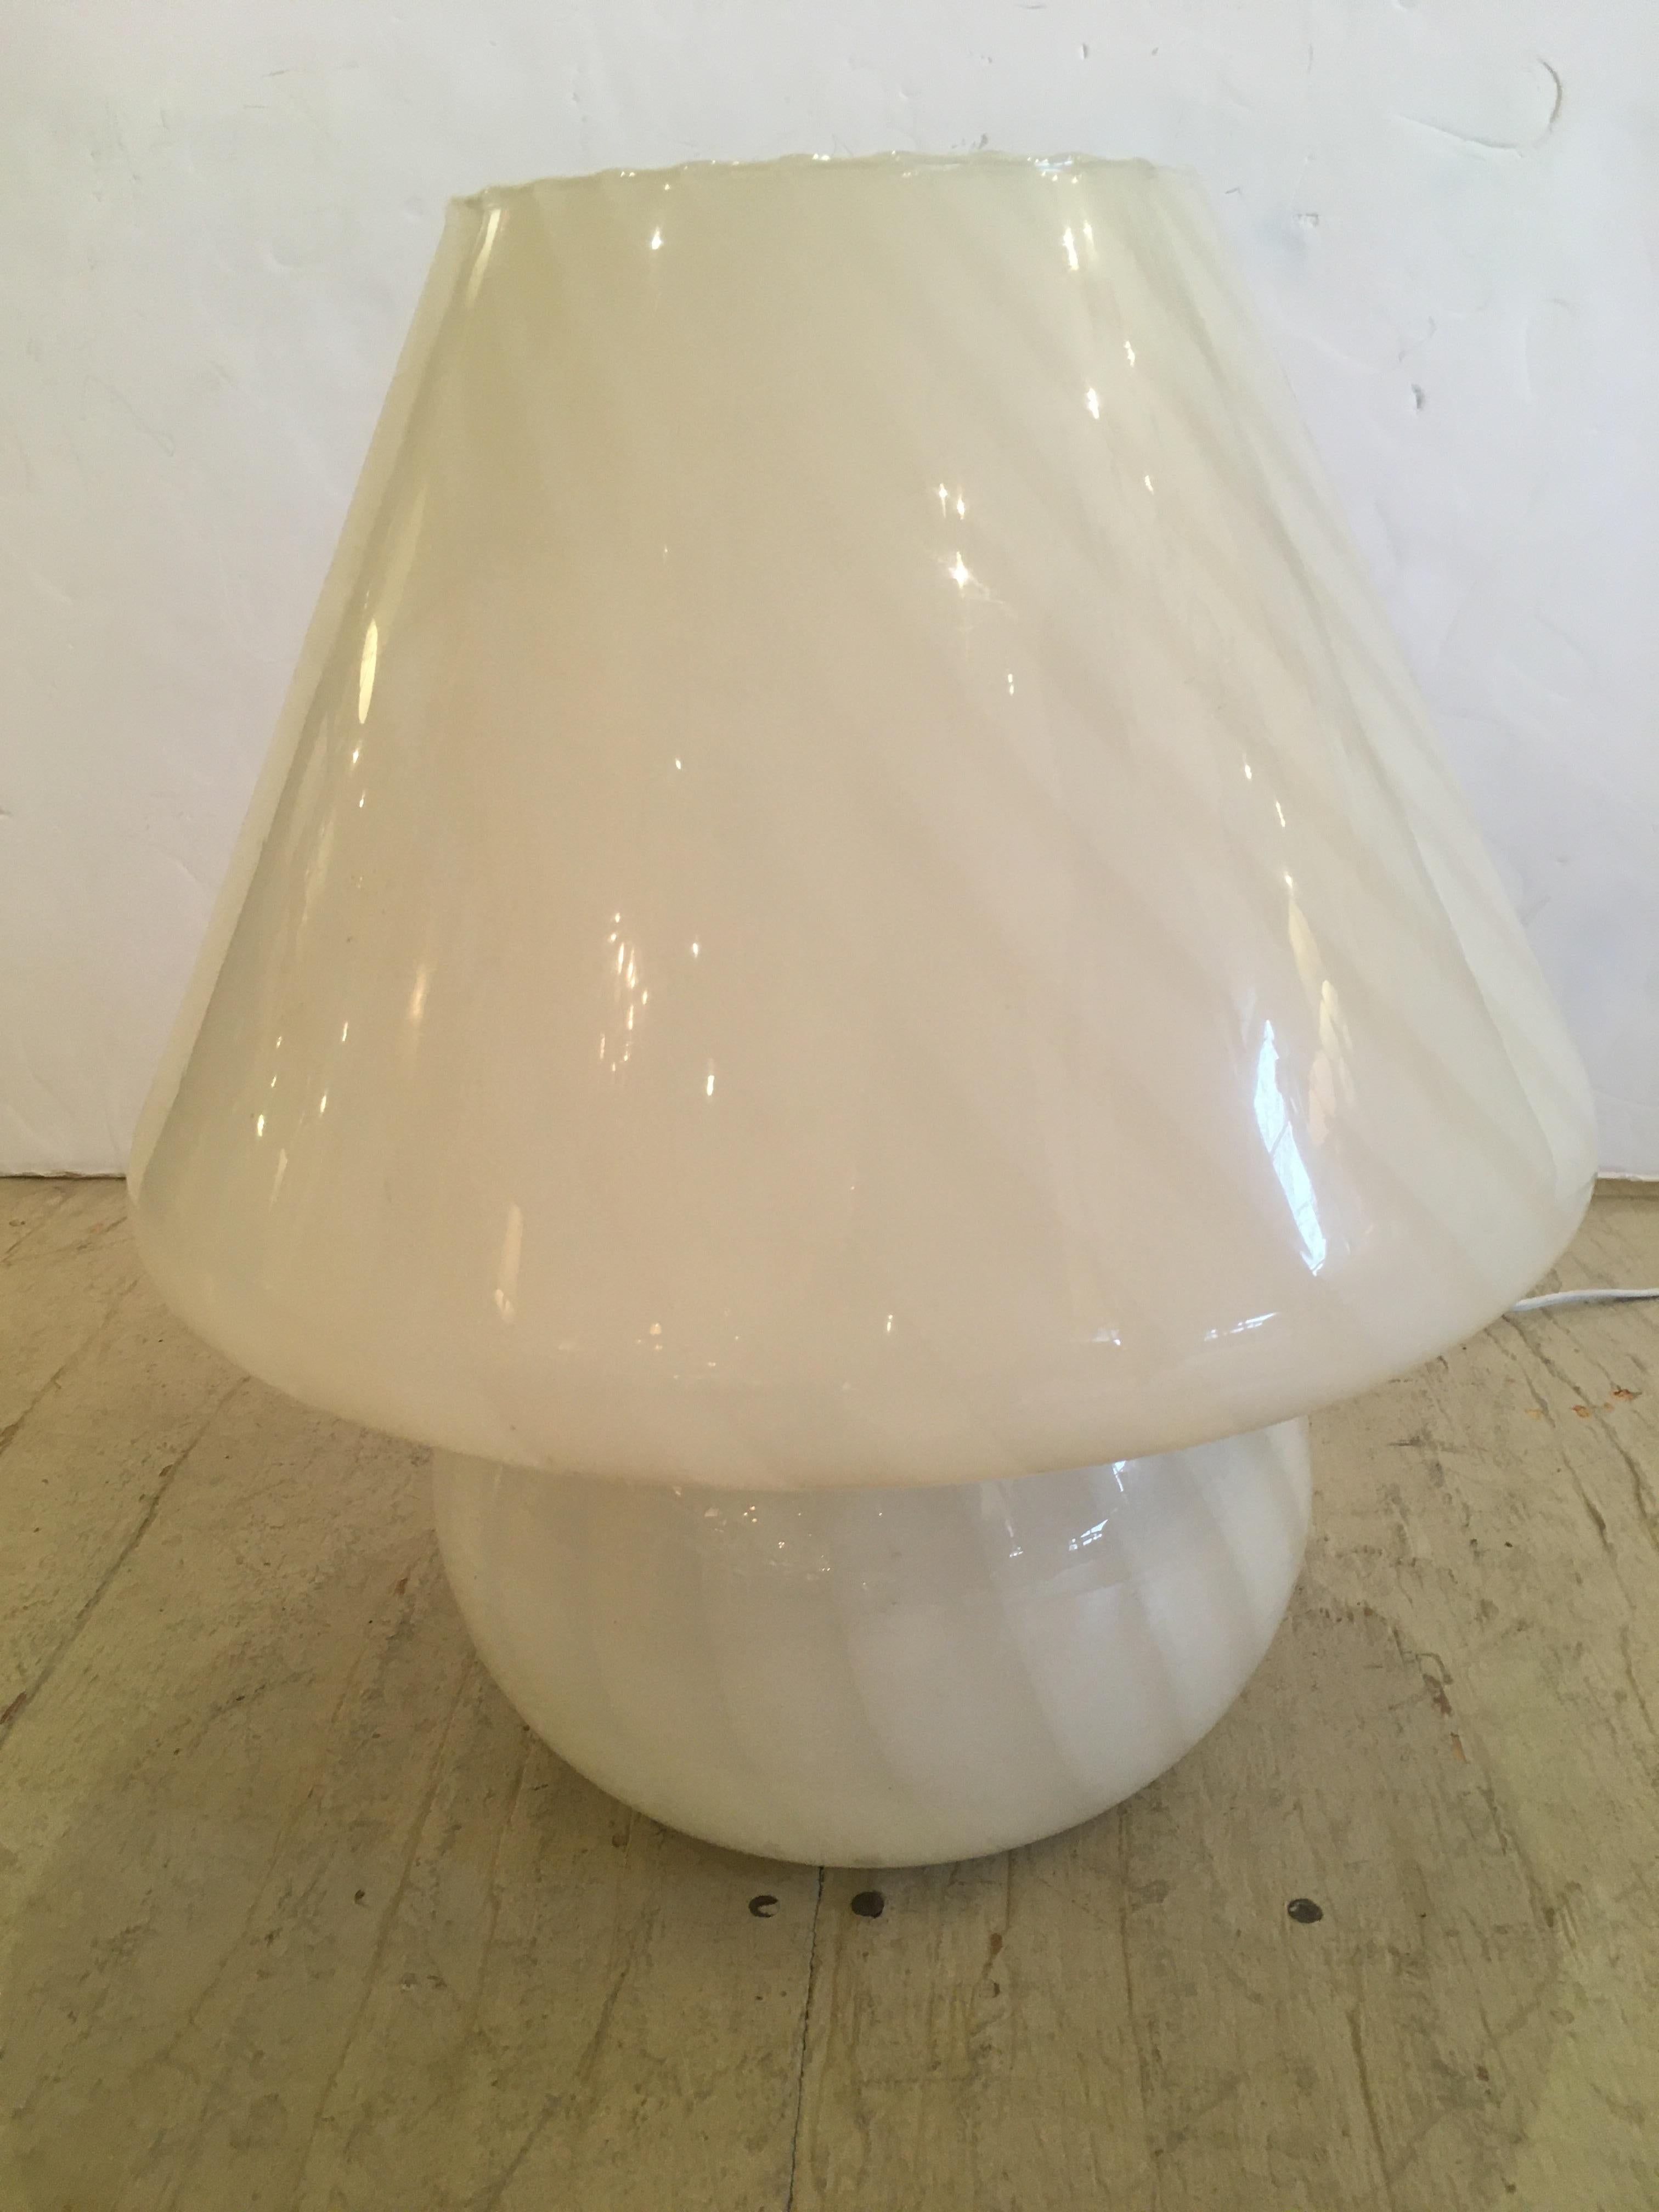 Fabulous vintage Italian swirl Murano glass mushroom lamp, beautiful and sculptural whether illuminated or not.